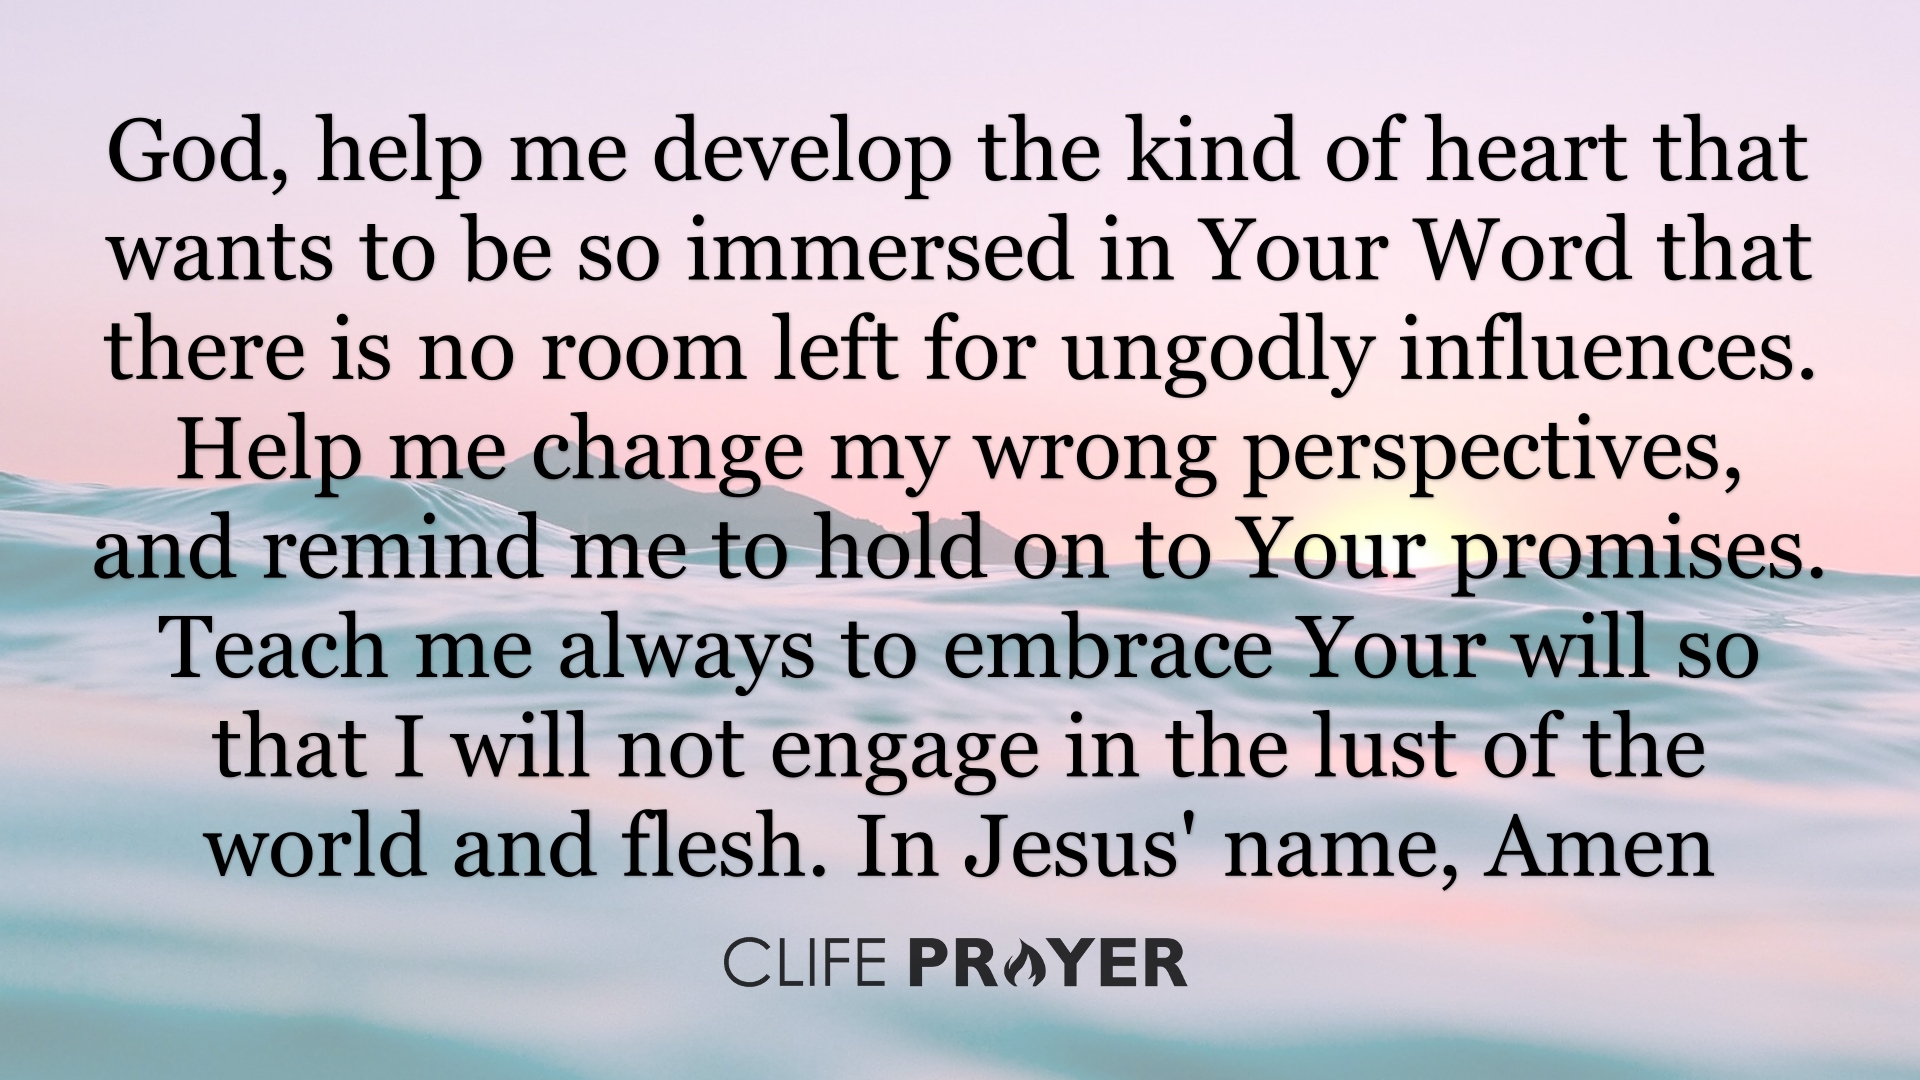 A Prayer for Living A God-Pleasing Life